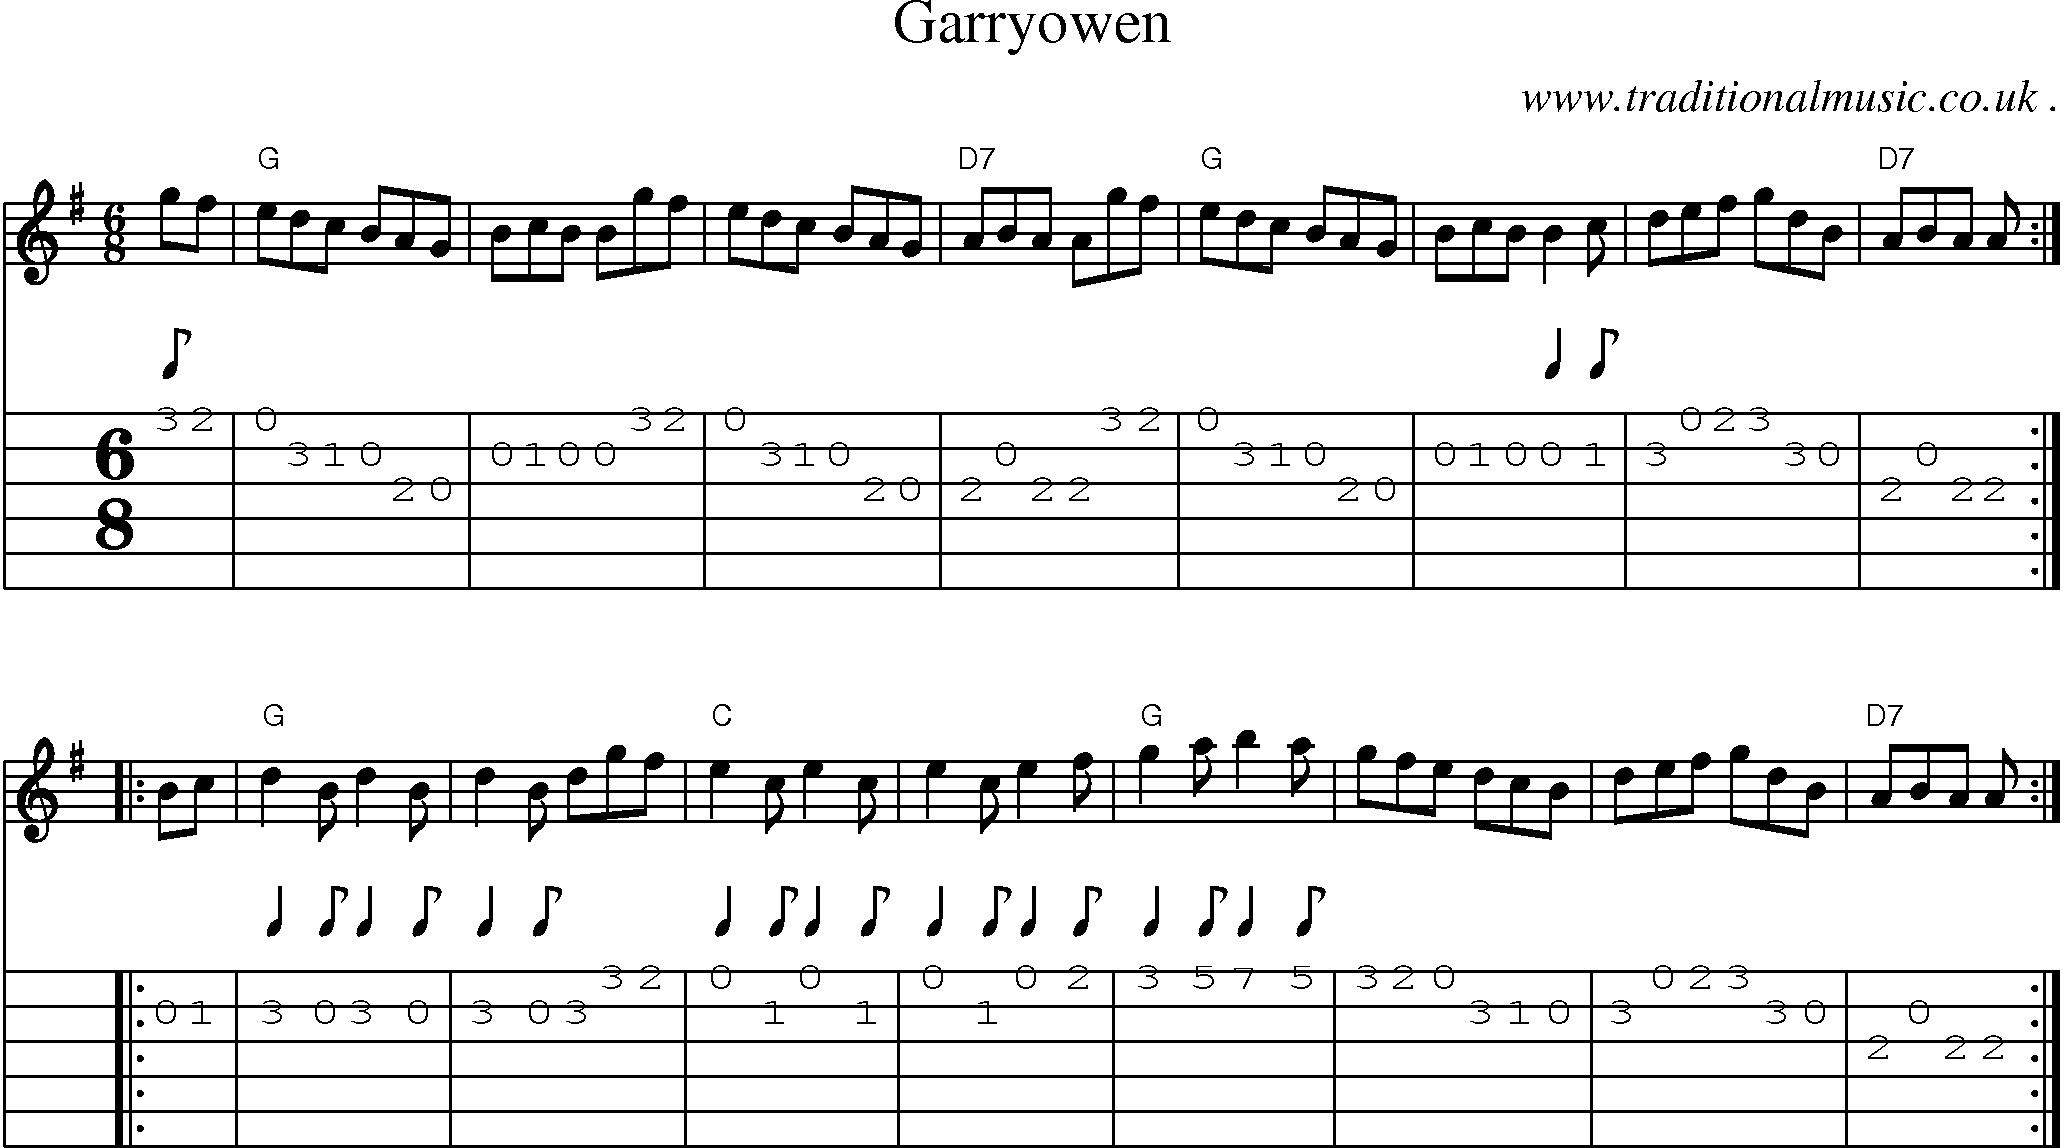 Sheet-music  score, Chords and Guitar Tabs for Garryowen